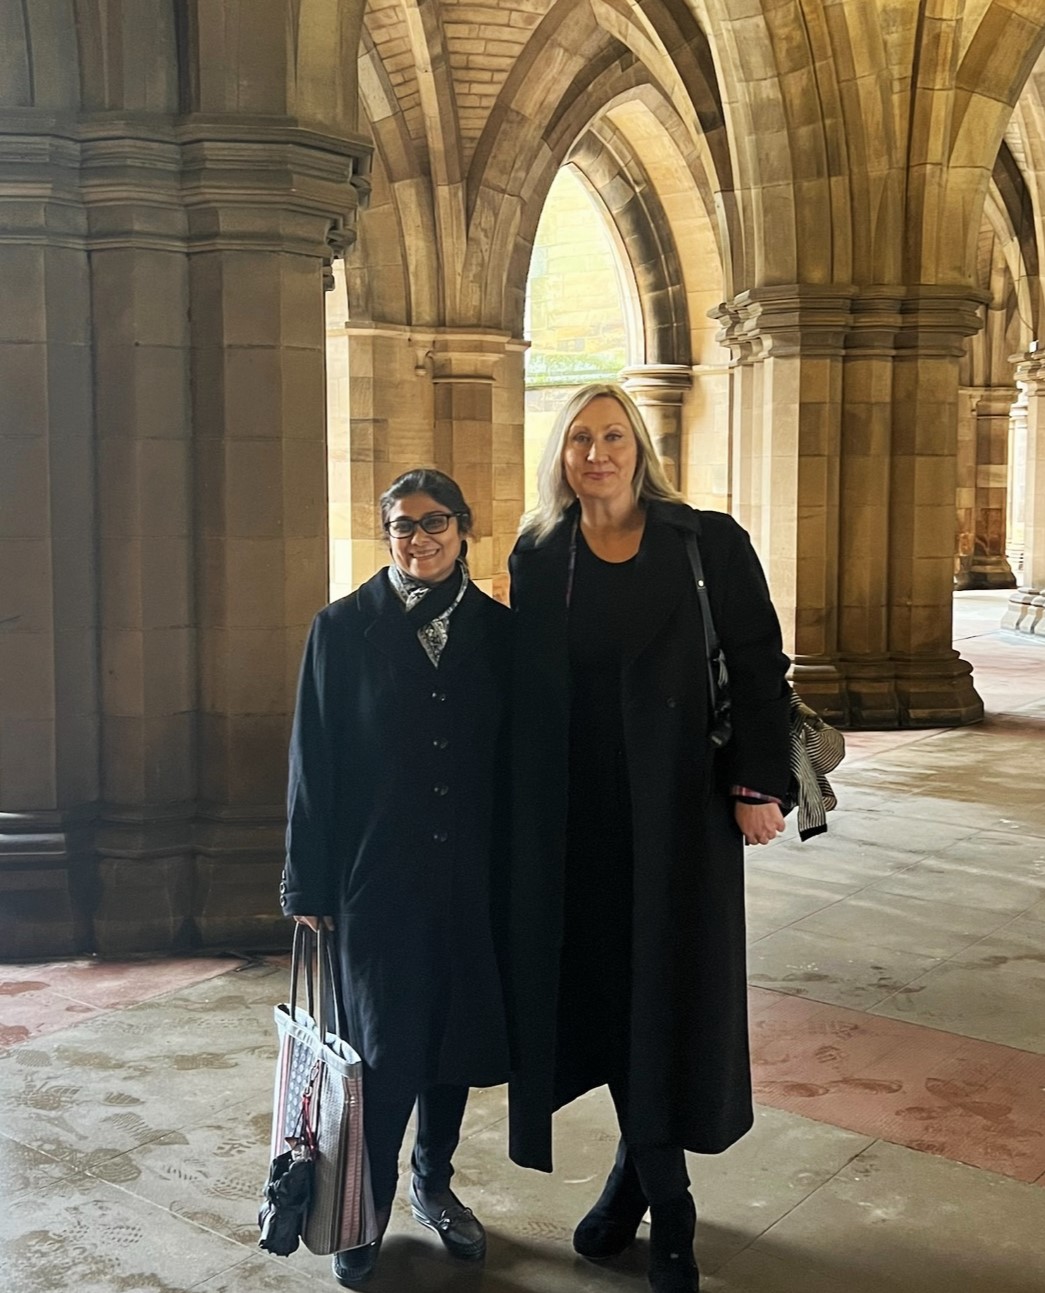 Tejshvi Jain and Maggie McColl at university cloisters.